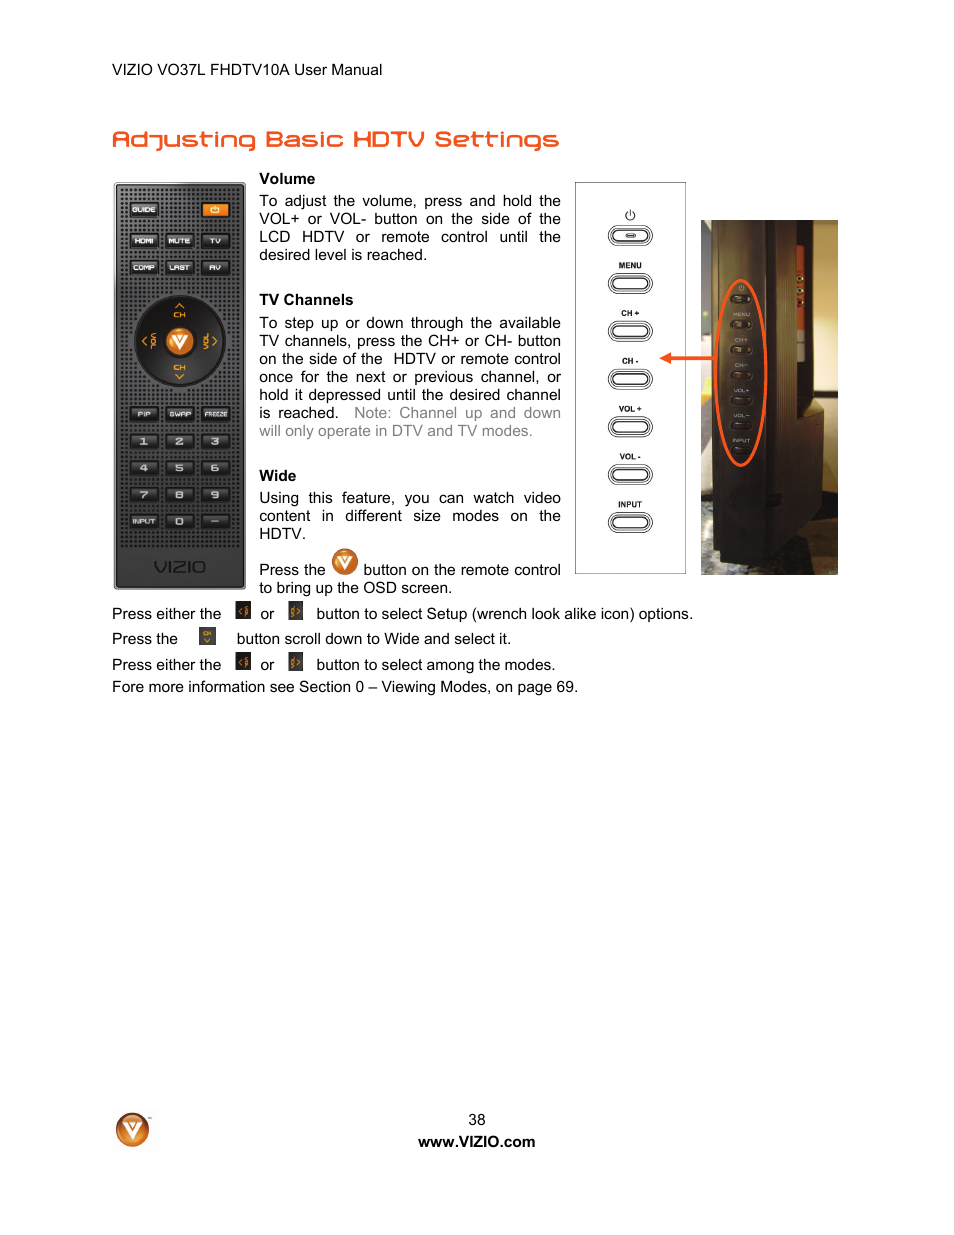 Adjusting basic hdtv settings | Vizio VO37L FHDTV10A User Manual | Page 38 / 80